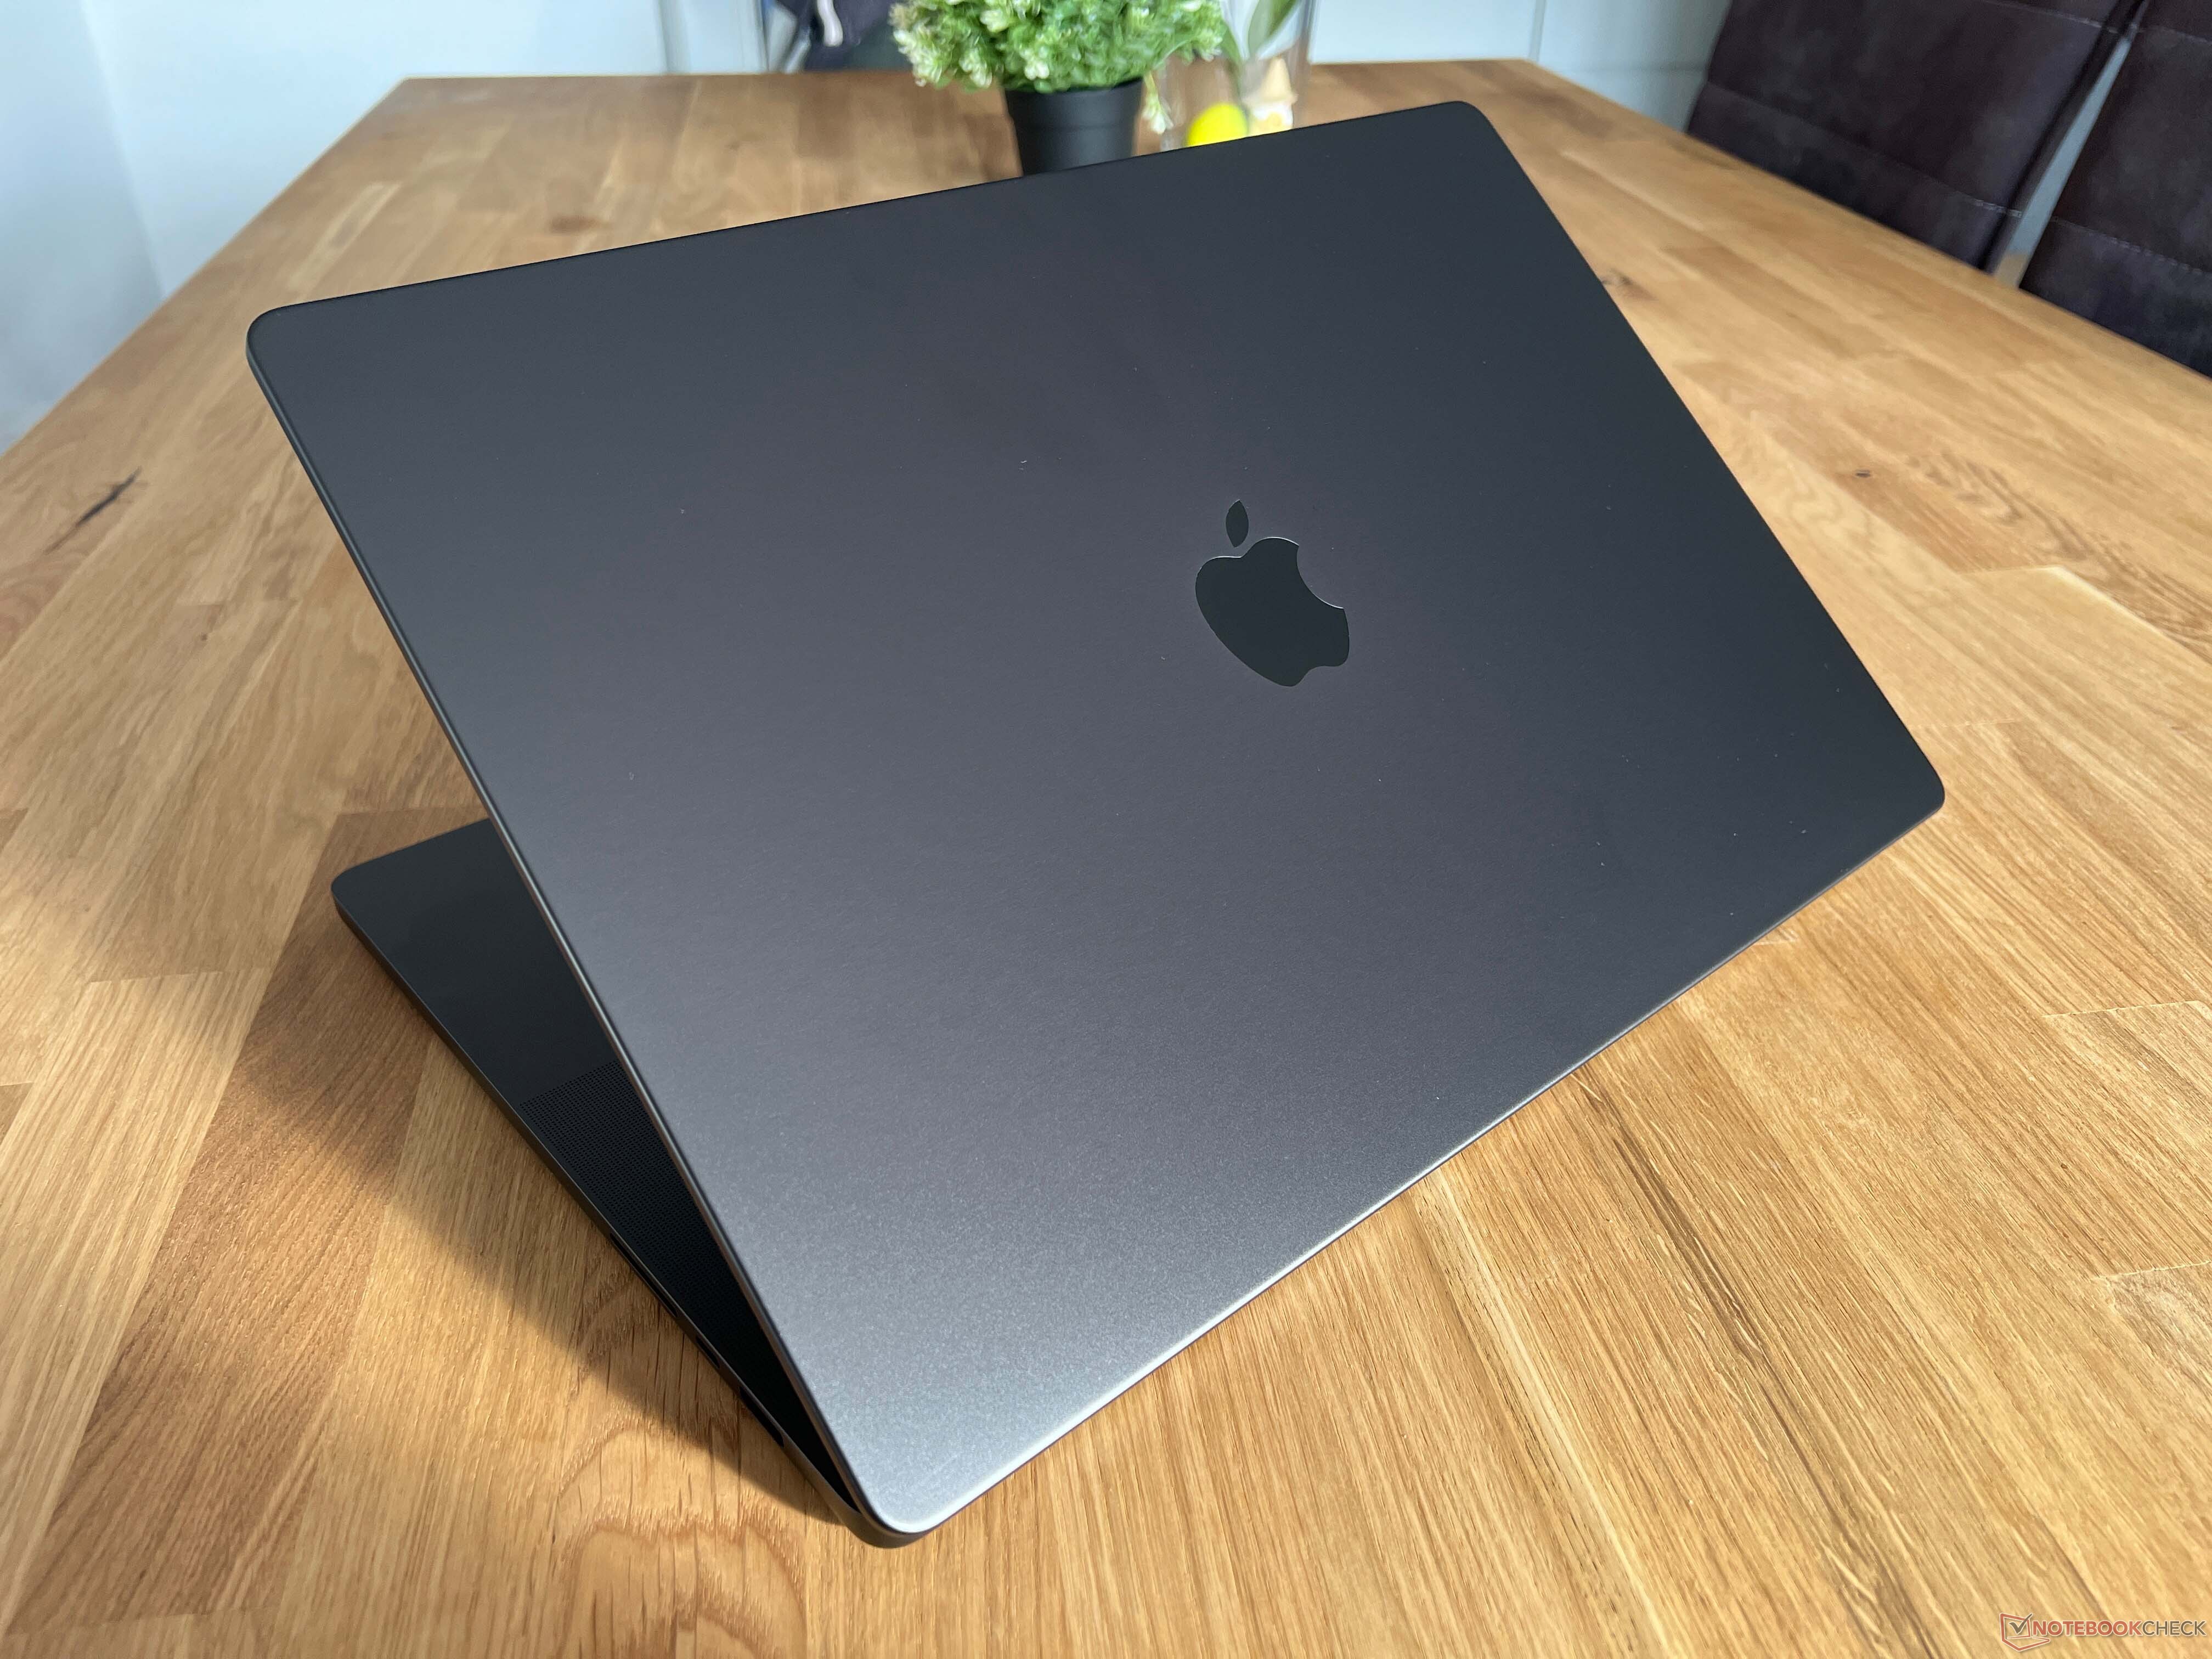 Apple MacBook Pro 16 2023 M3 Max Review - M3 Max challenges HX